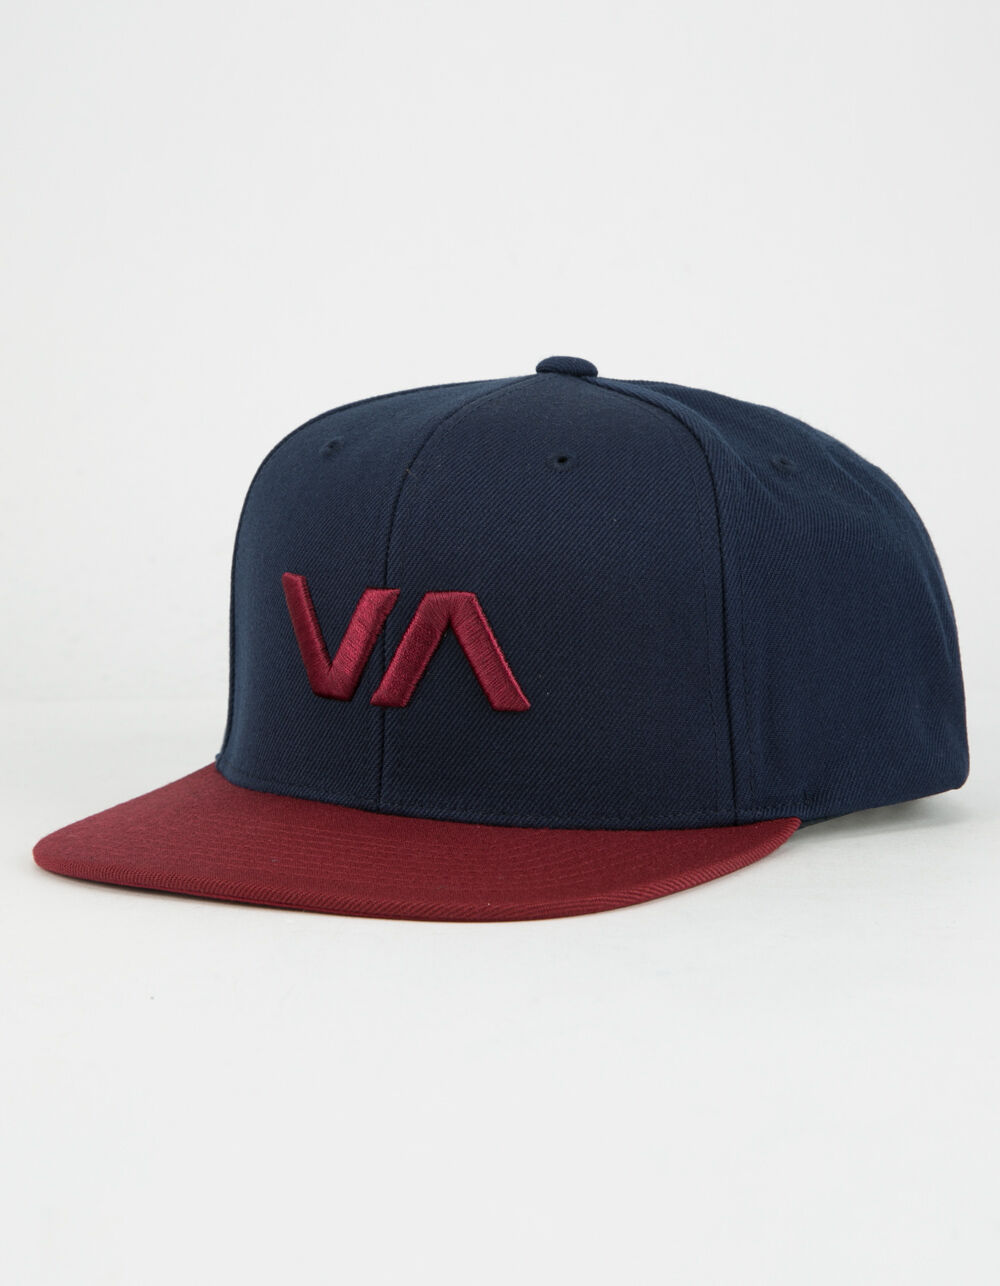 RVCA VA II Mens Snapback Hat image number 0